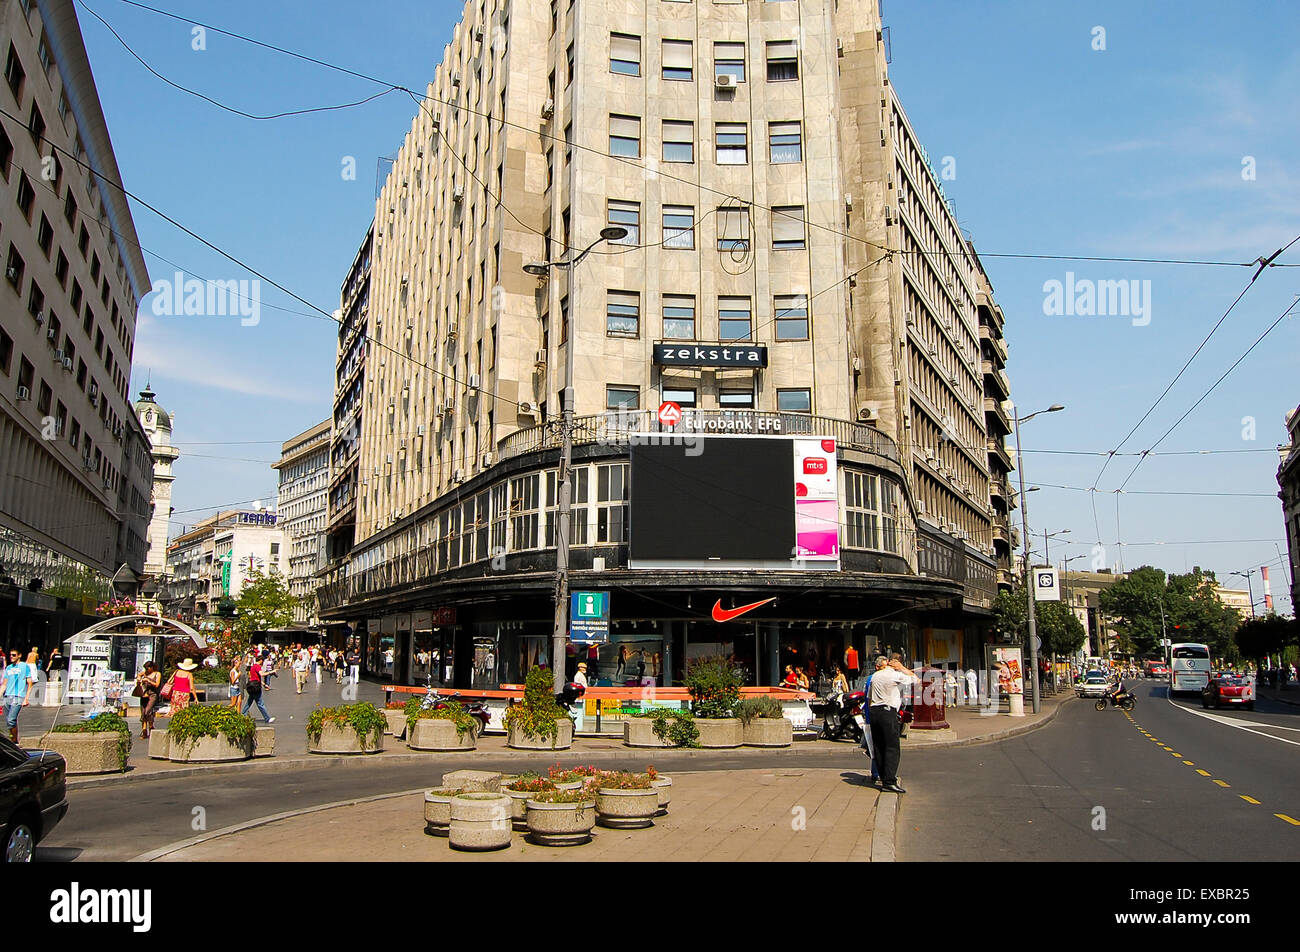 Belgrade - Serbia Stock Photo